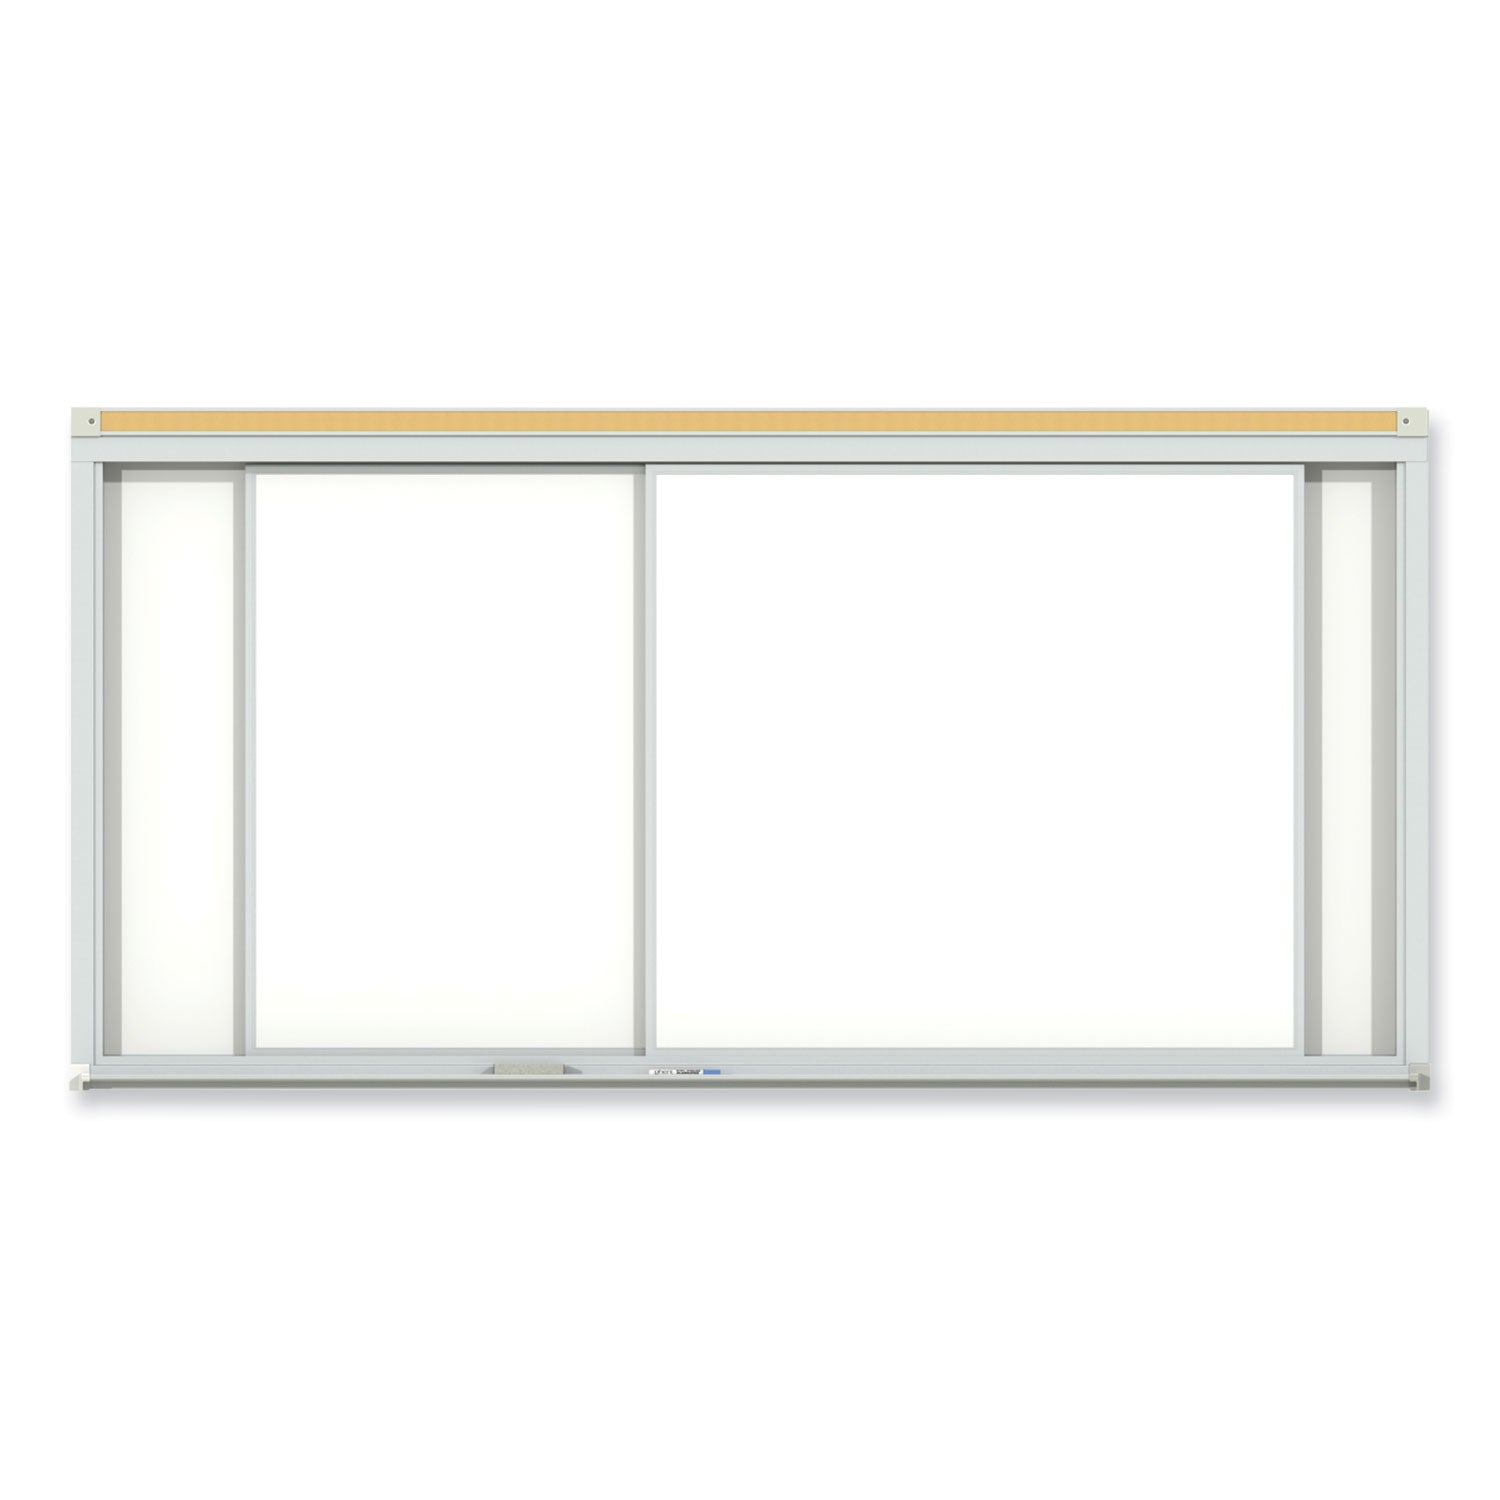 horizontal-sliding-porcelain-magnetic-whiteboard-96-x-48-white-surface-satin-aluminum-frame-ships-in-7-10-business-days_ghehsm248 - 1